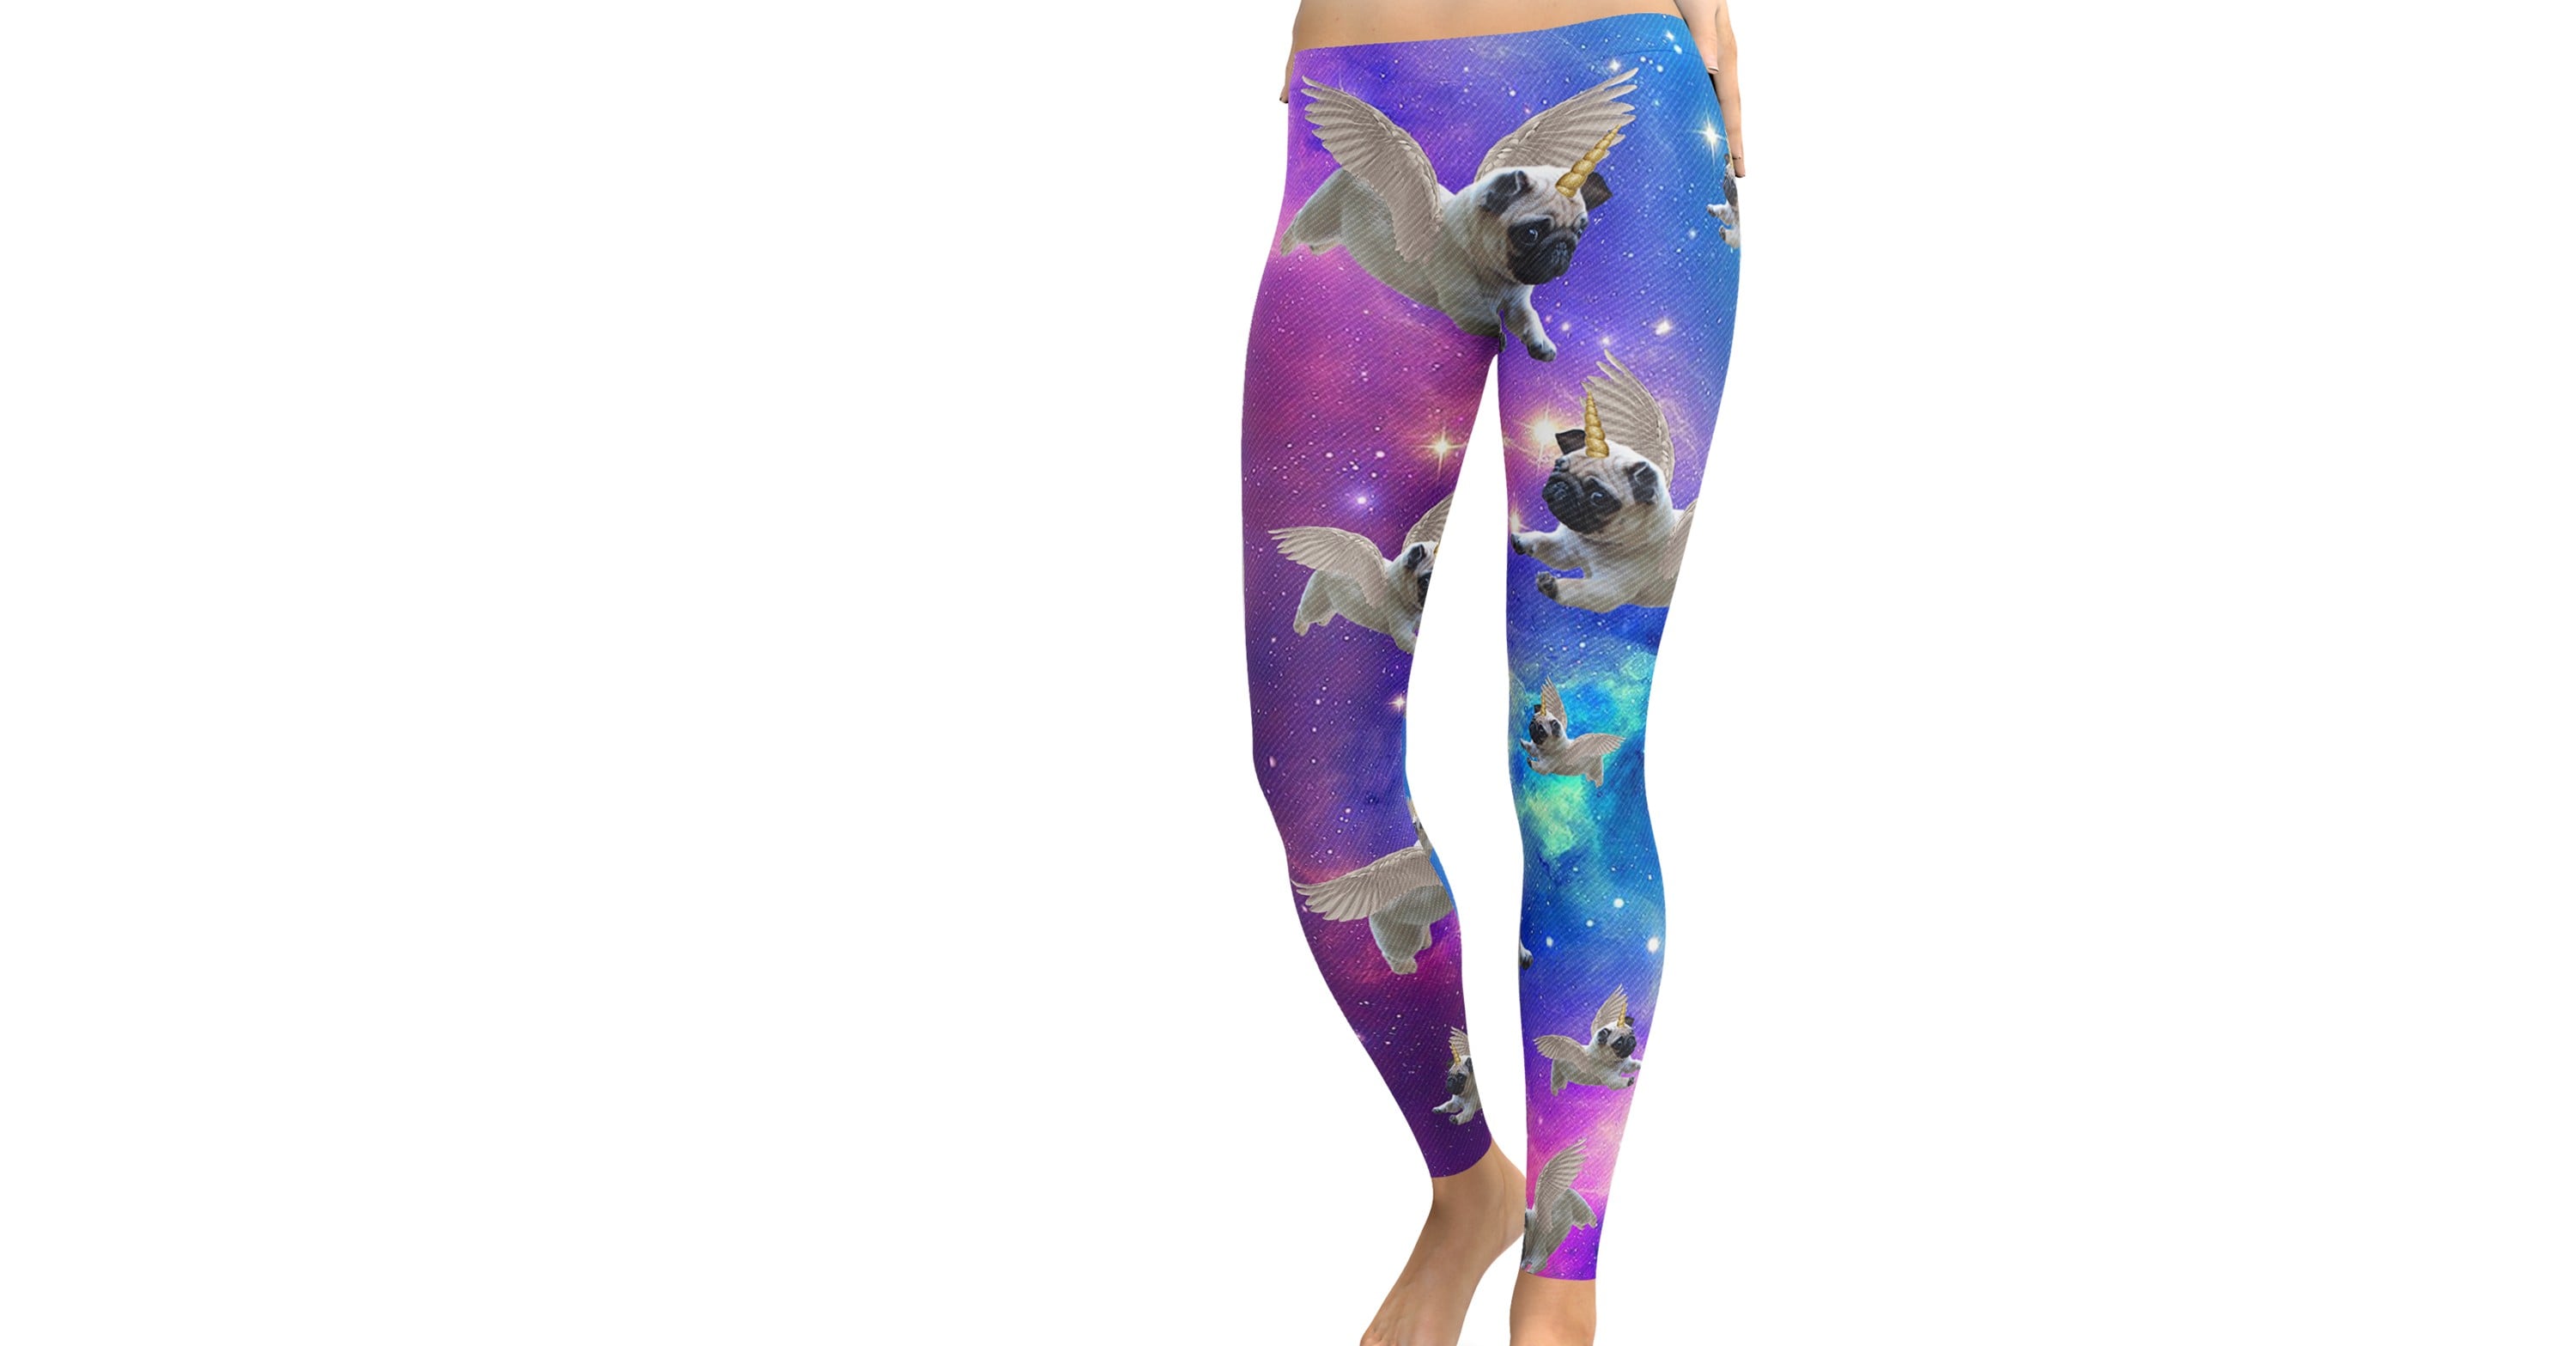 Galaxy Funnel - Women's Yoga Leggings - Cameron Creations Ltd.